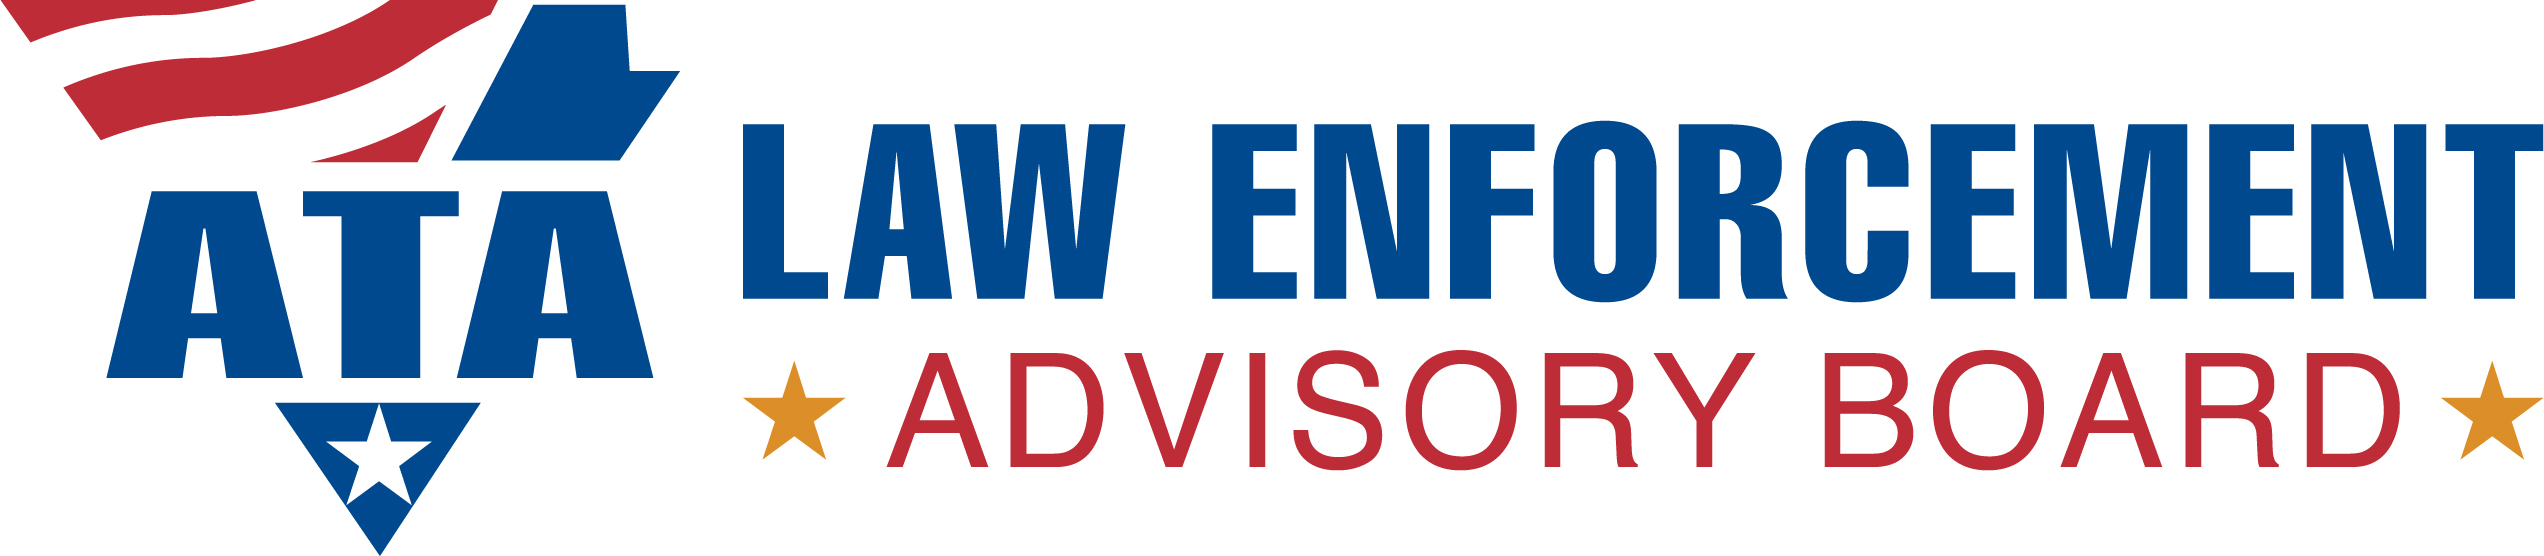 ATA Law Enforcement Advisory Board